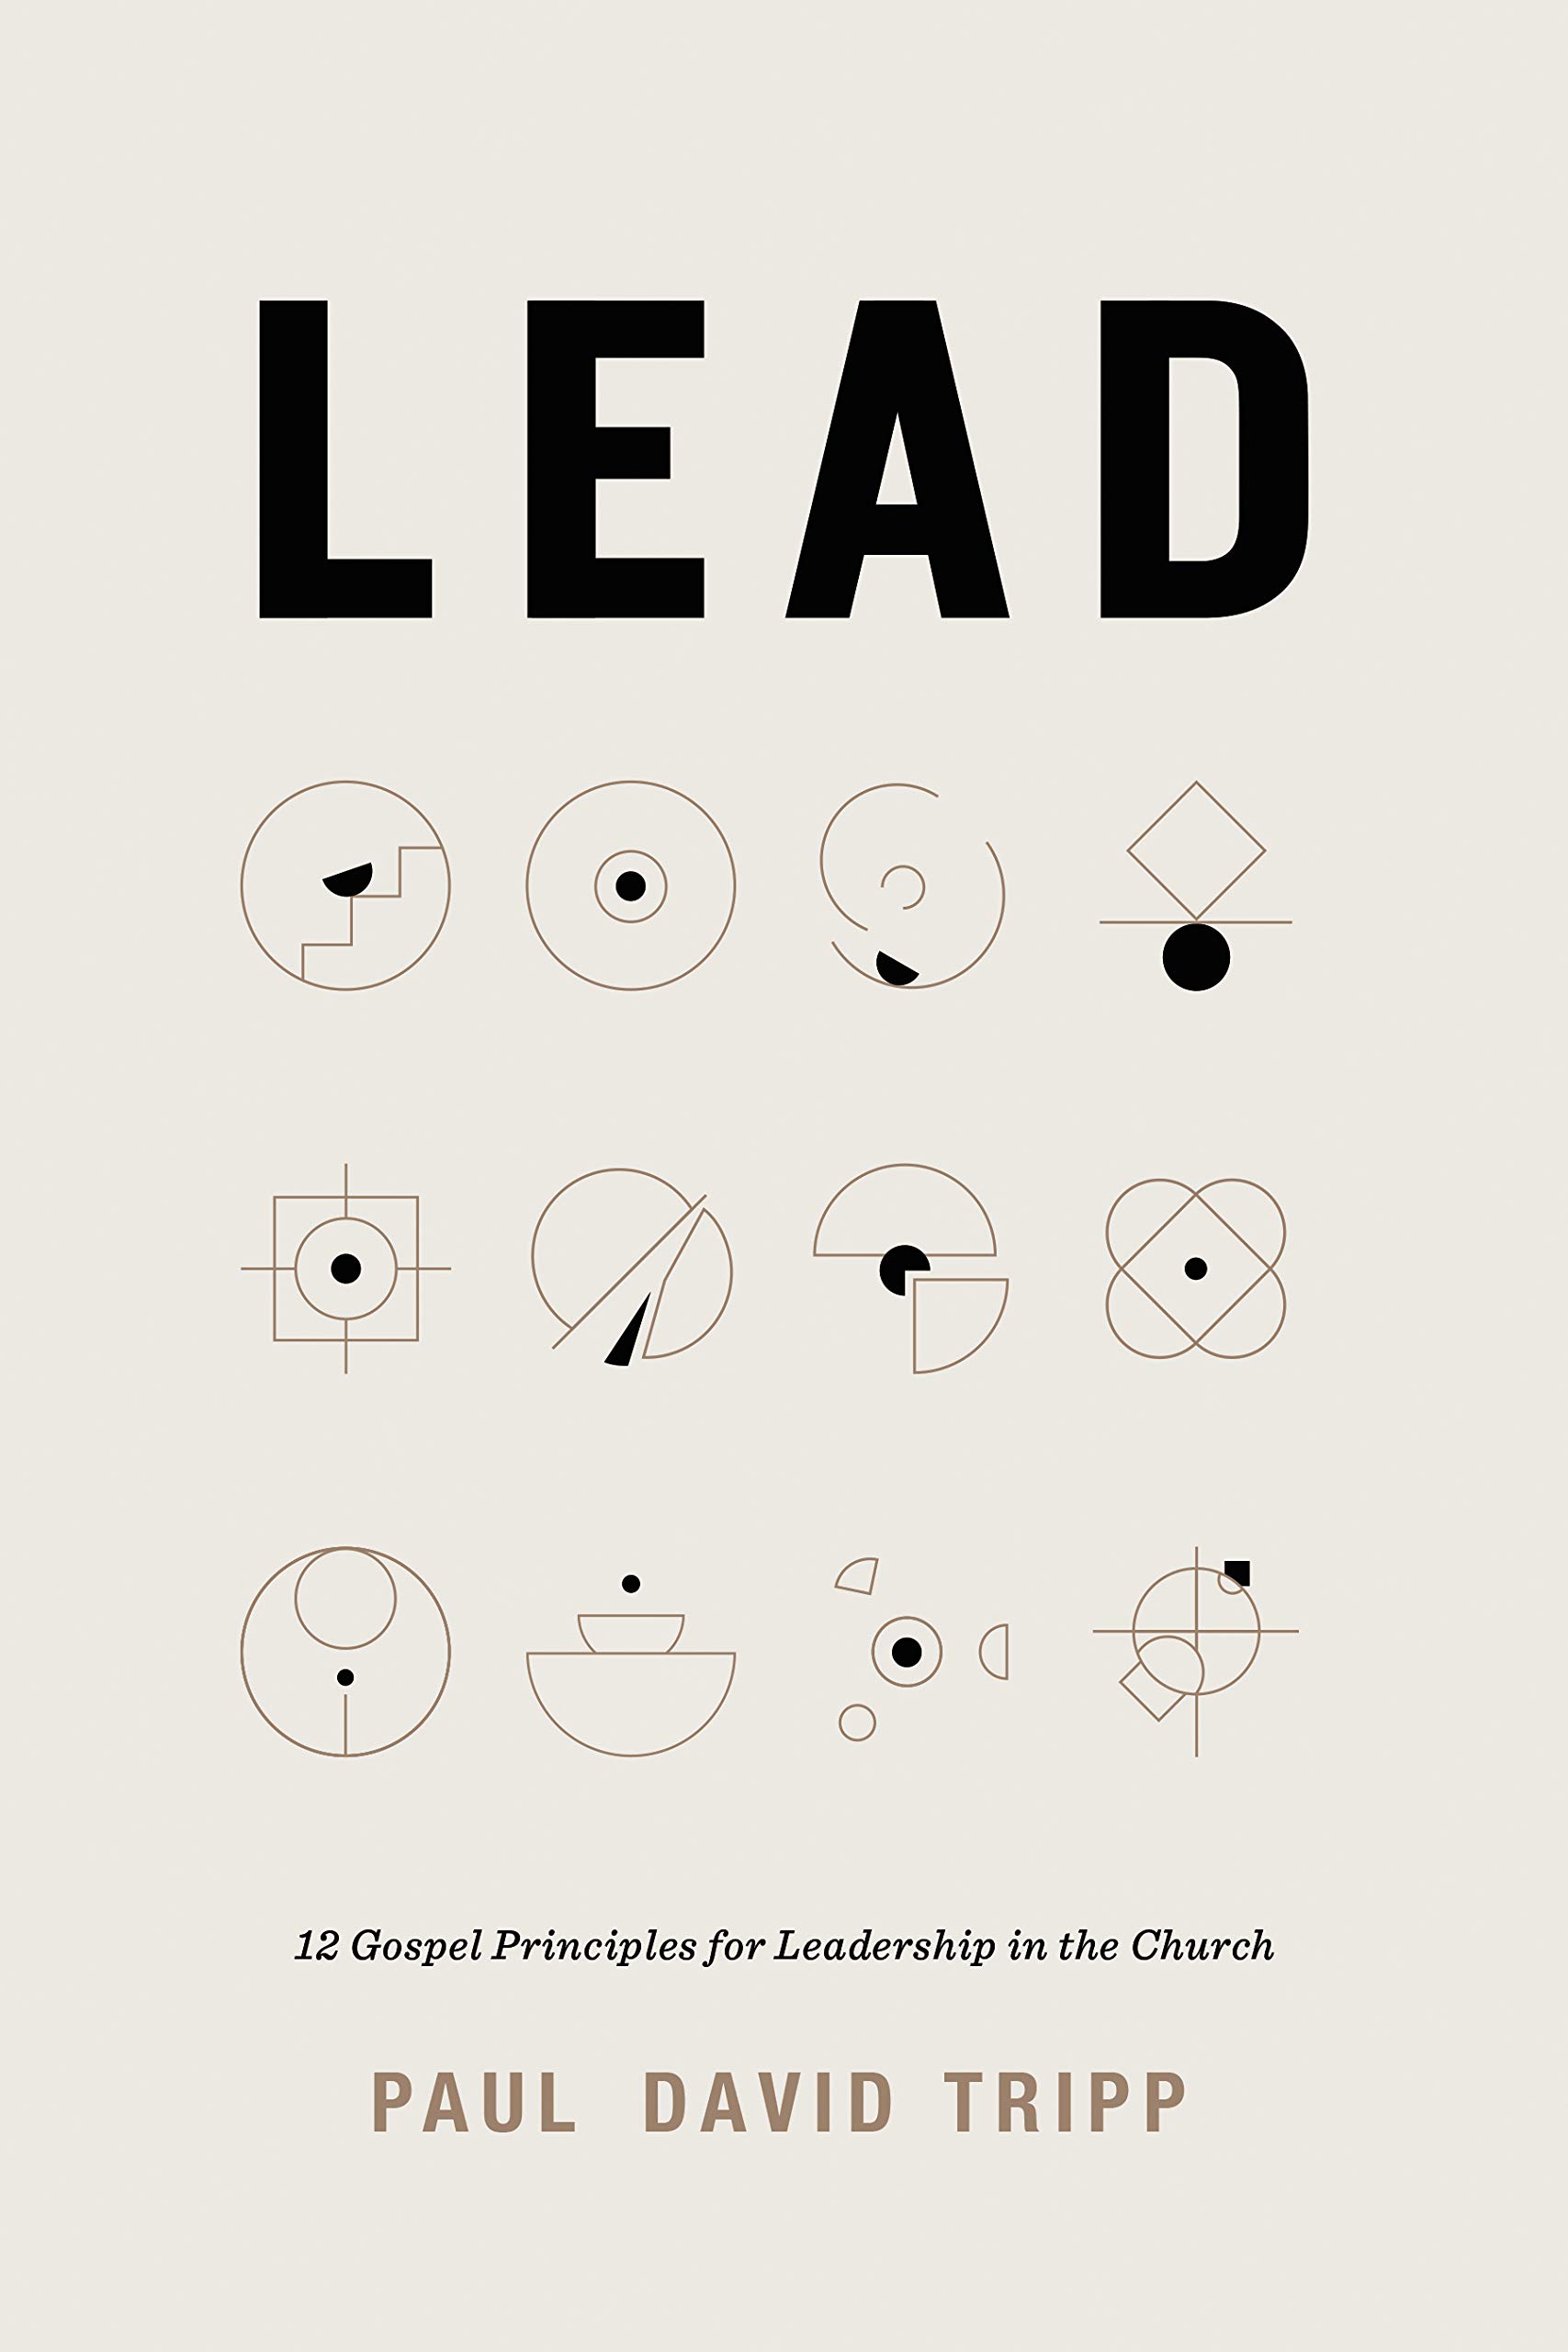 Lead - 12 Gospel Principles for Leadership in the Church